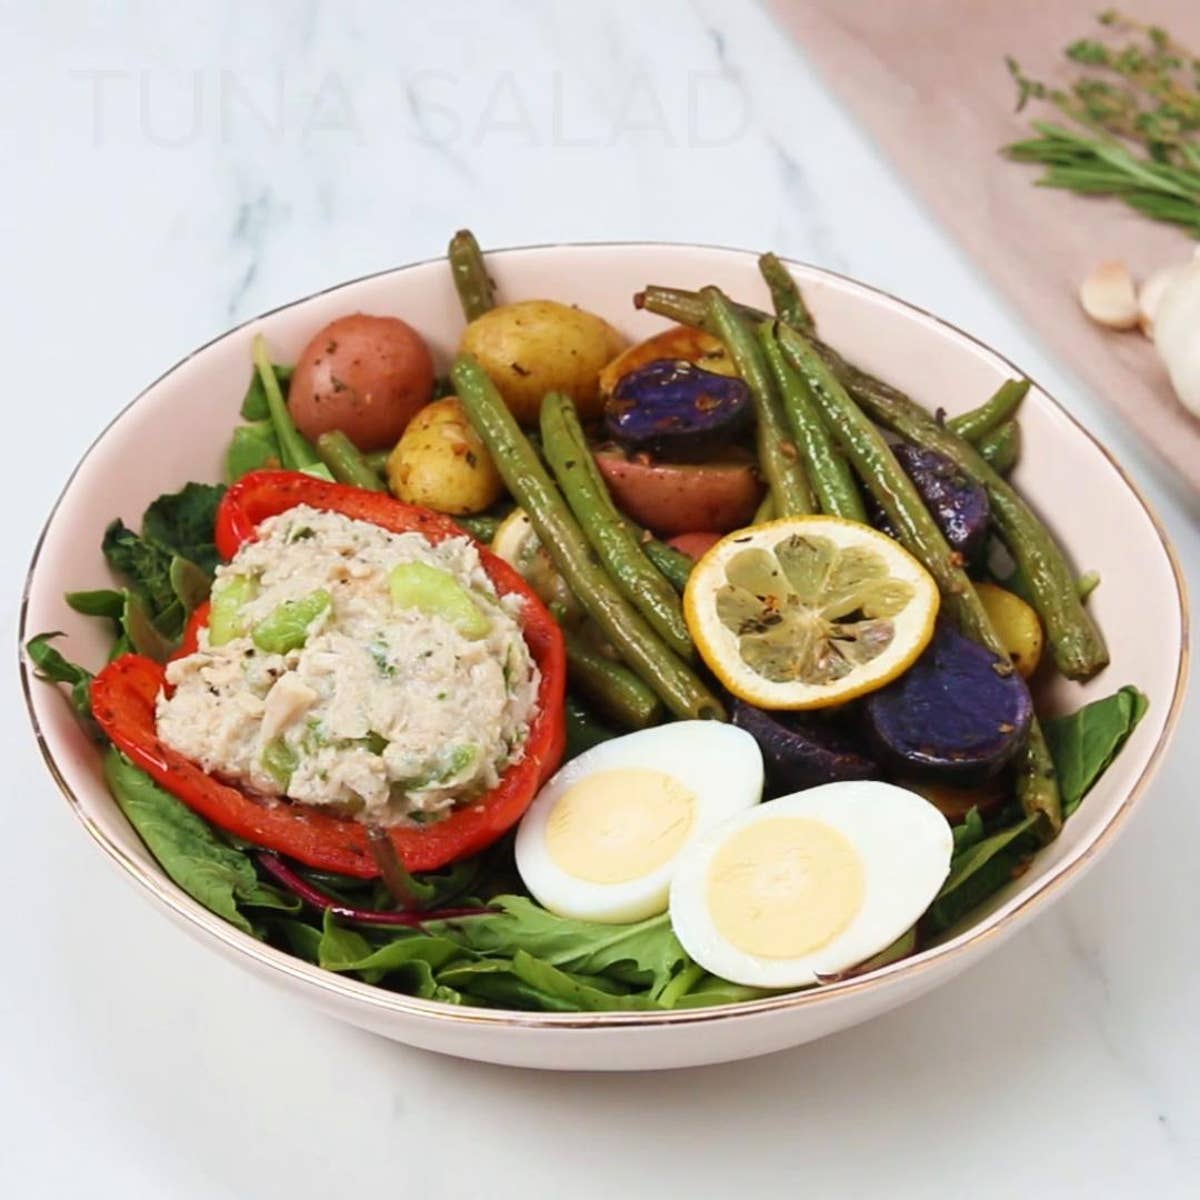 Tuna Salad With Roasted Veggies